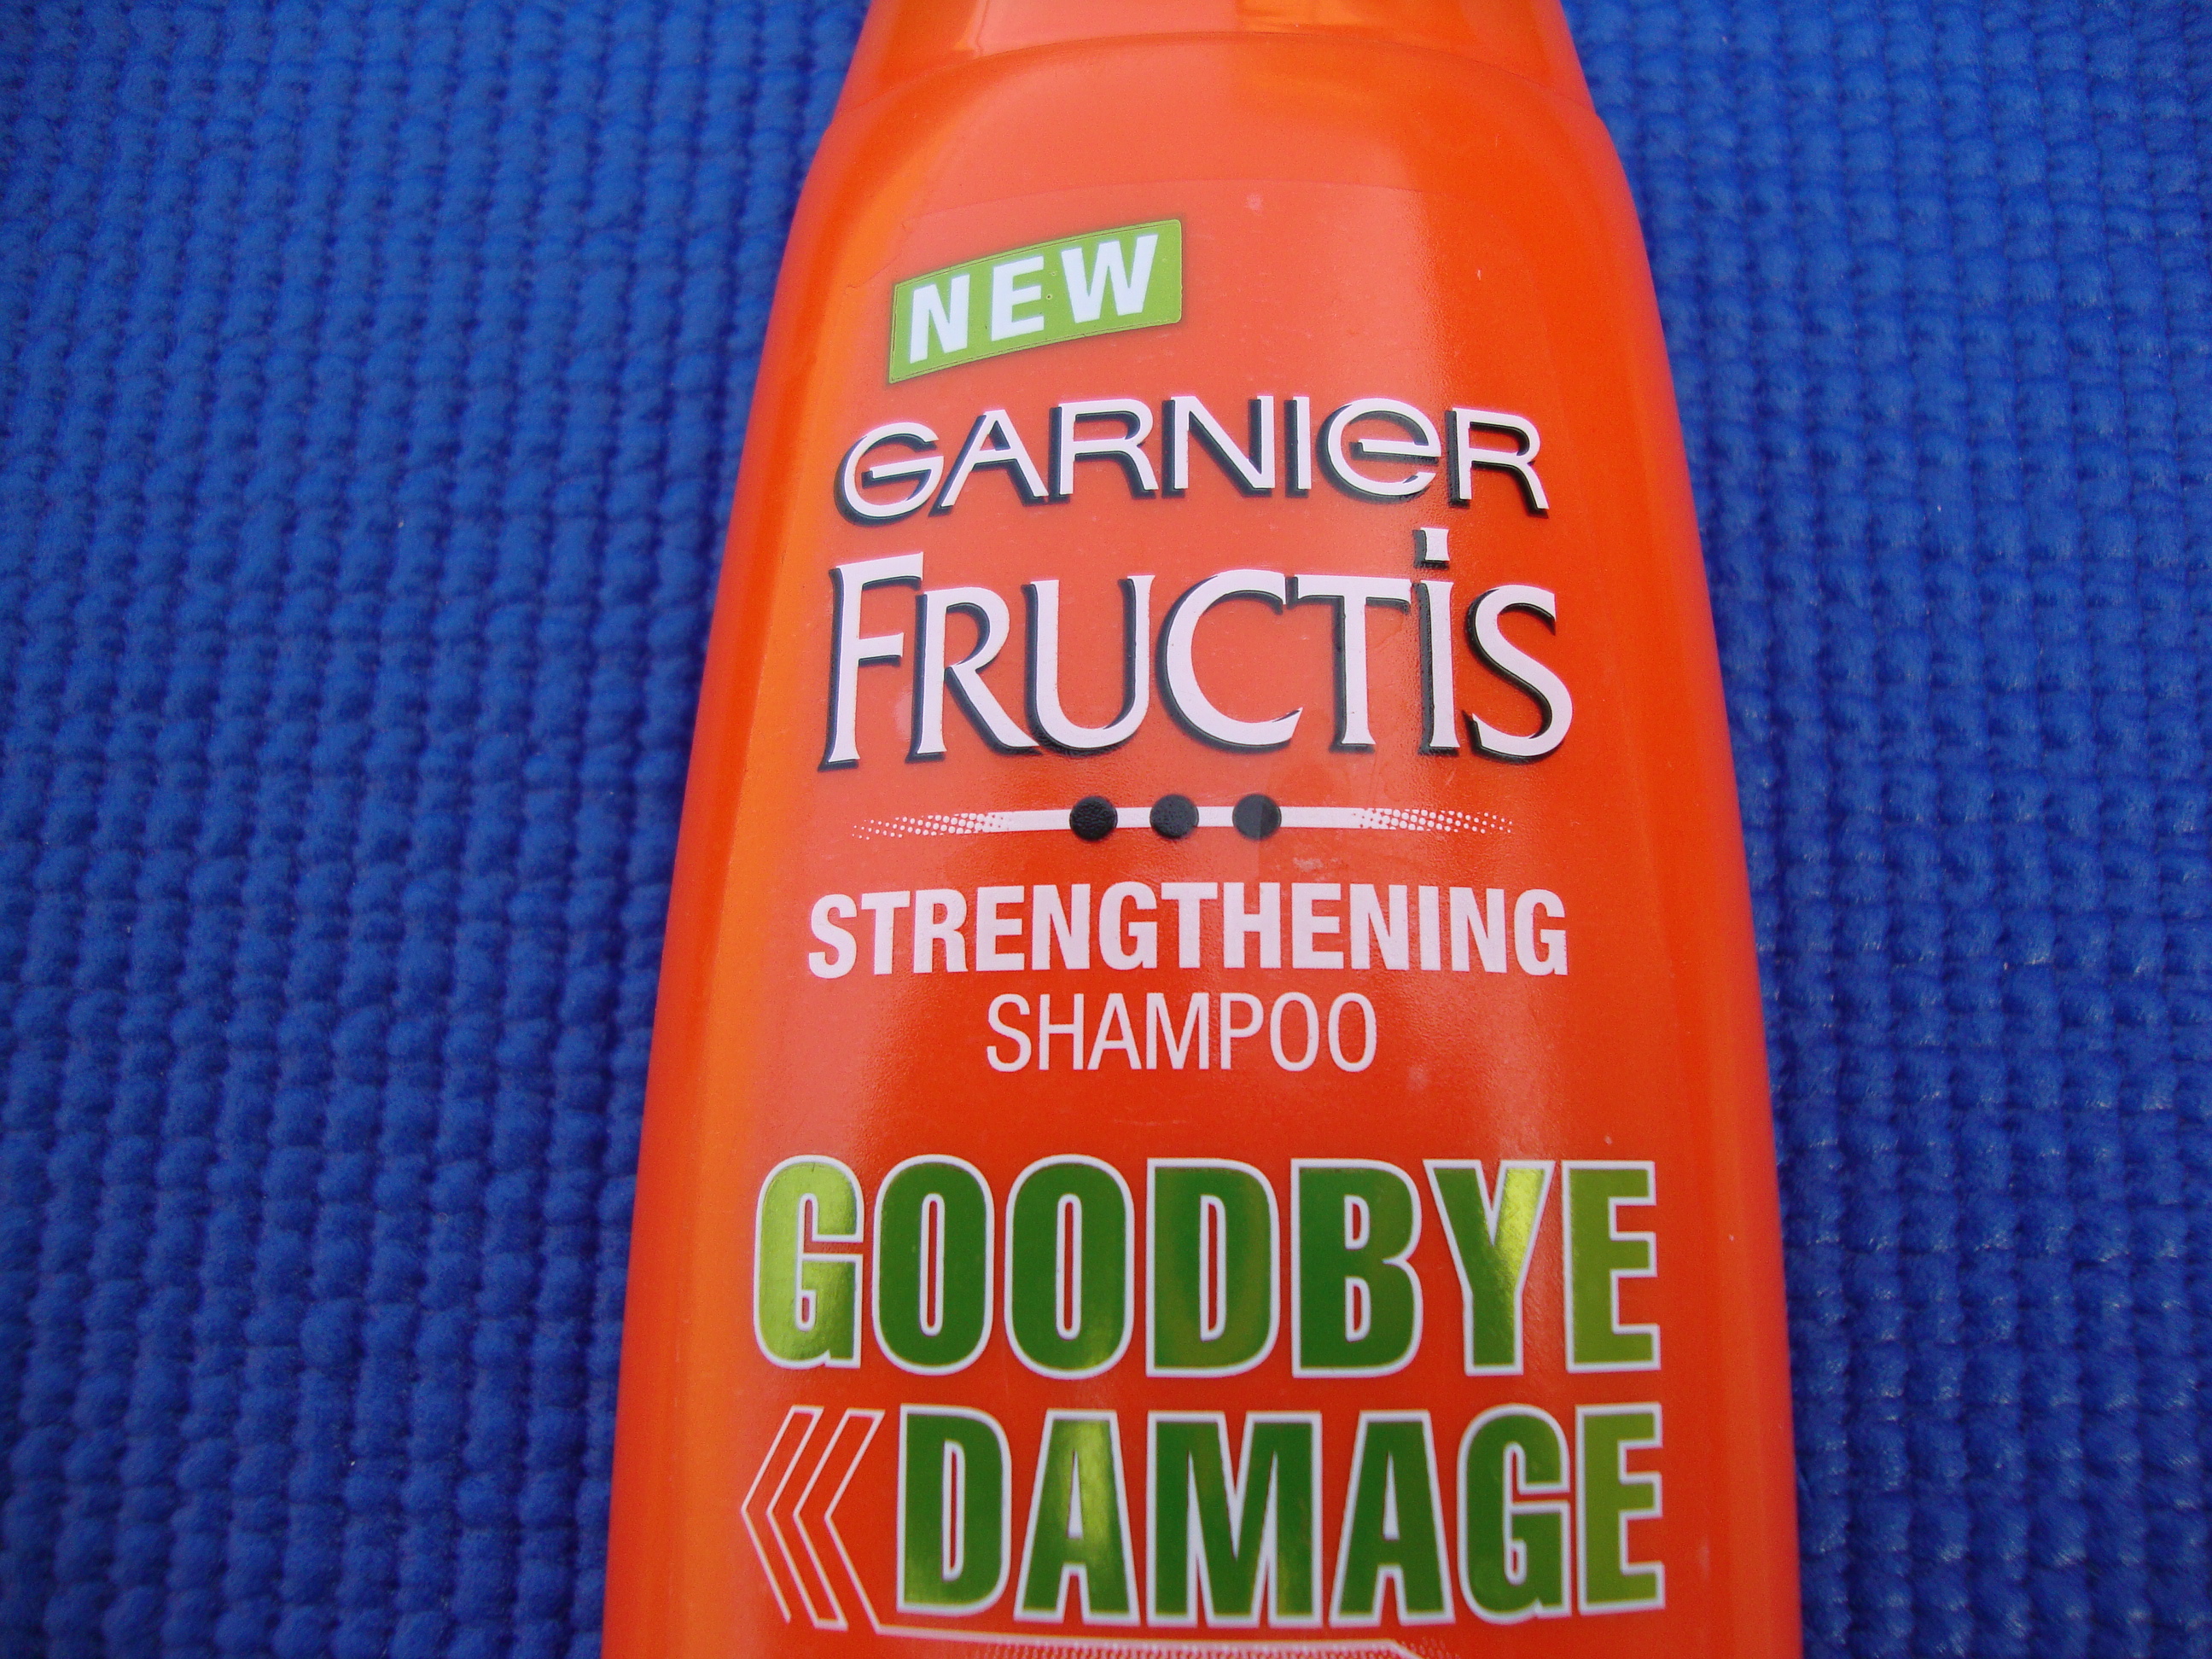 Garnier Fructis Strengthening Shampoo Goodbye Damage (3)